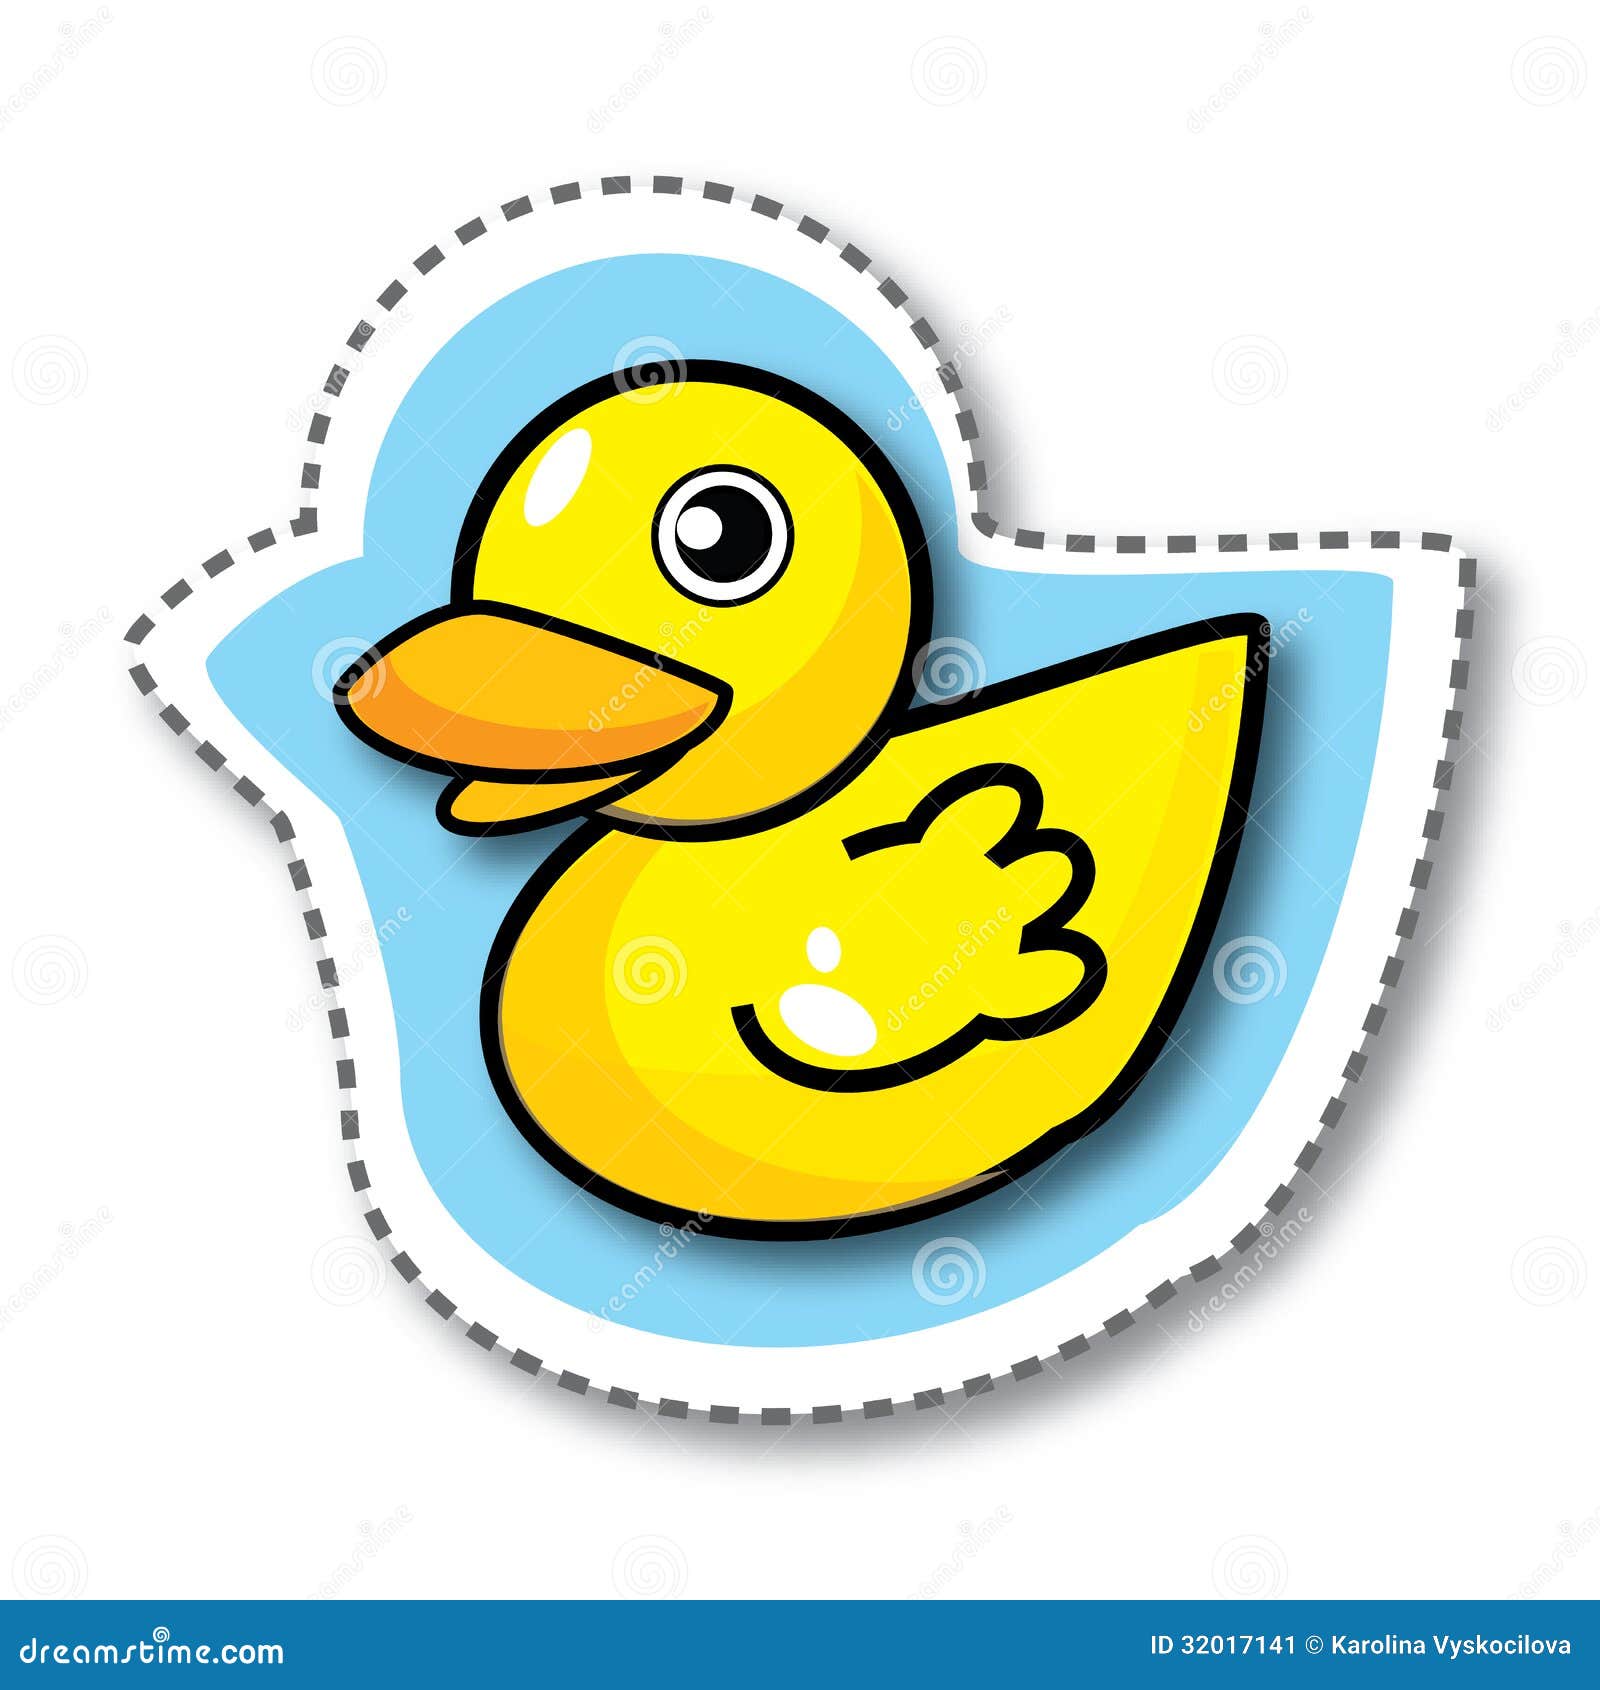 Funny duck cartoon illustration egg carton label